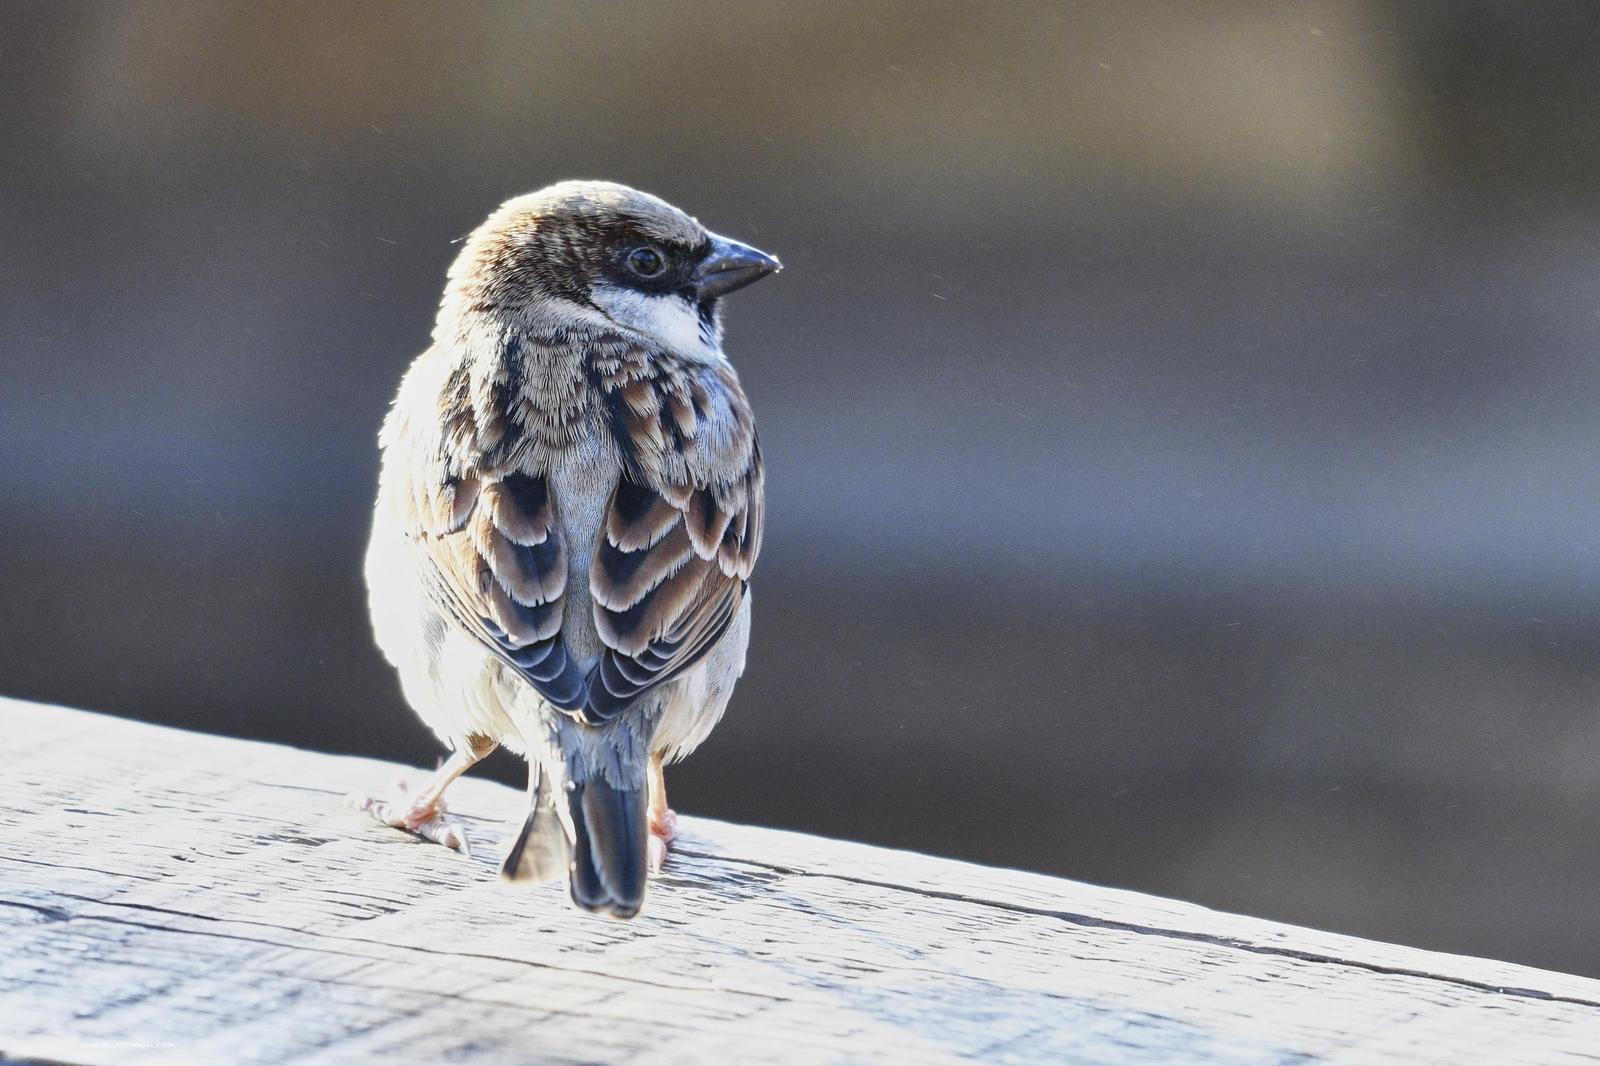 House Sparrow Photo by Simepreet Cheema